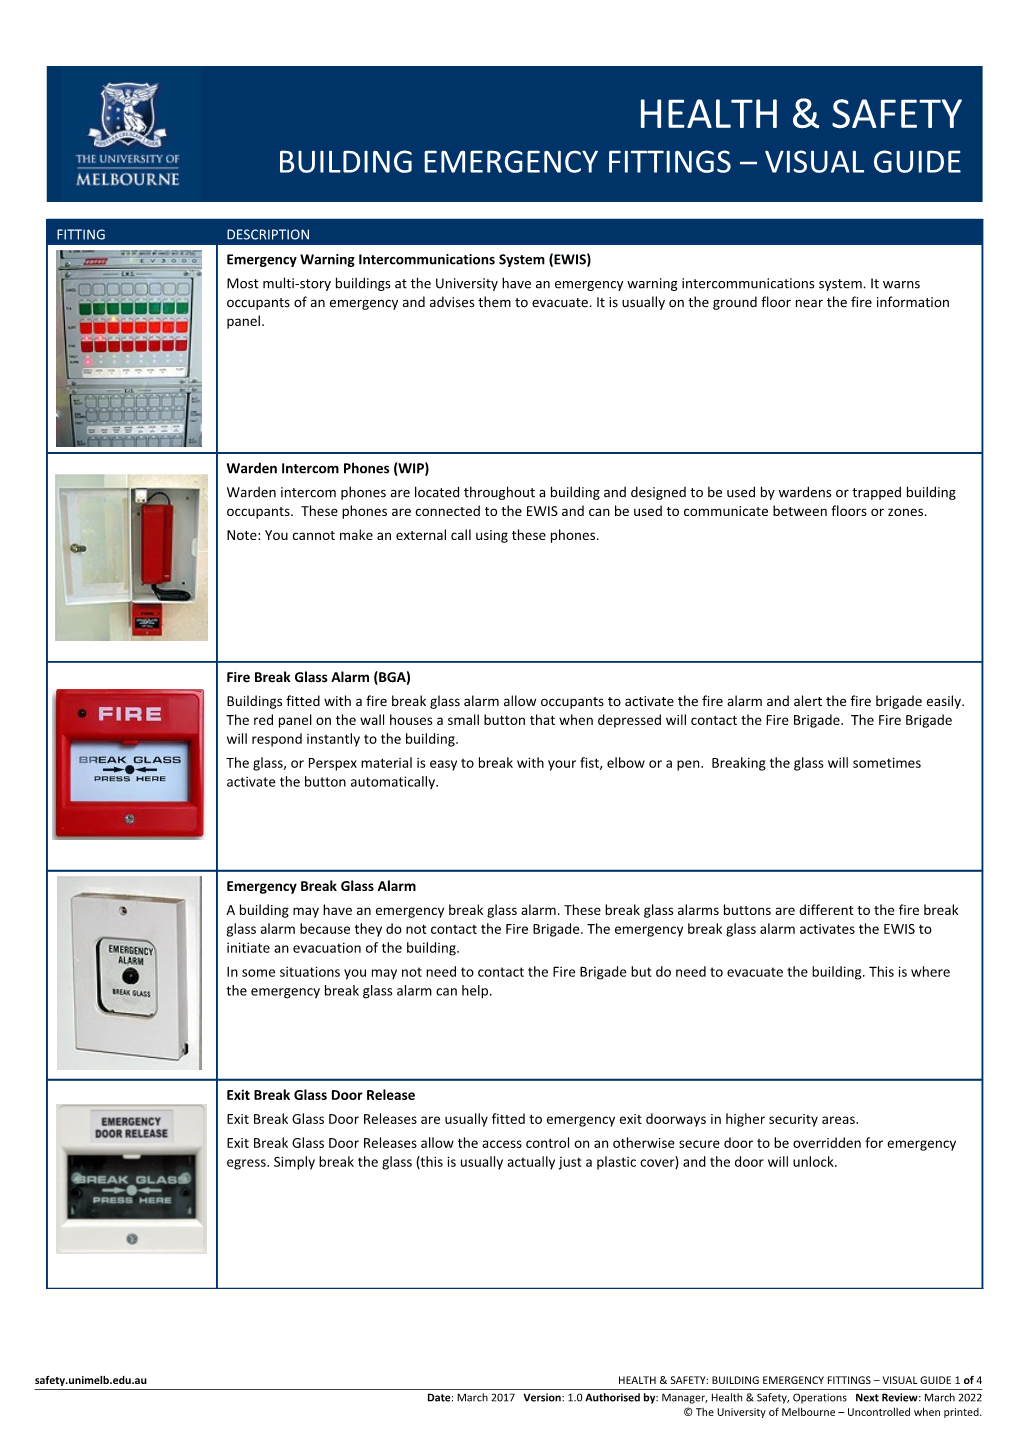 Safety.Unimelb.Edu.Au Health & Safety: Building Emergency Fittings Visual Guide1 of 3